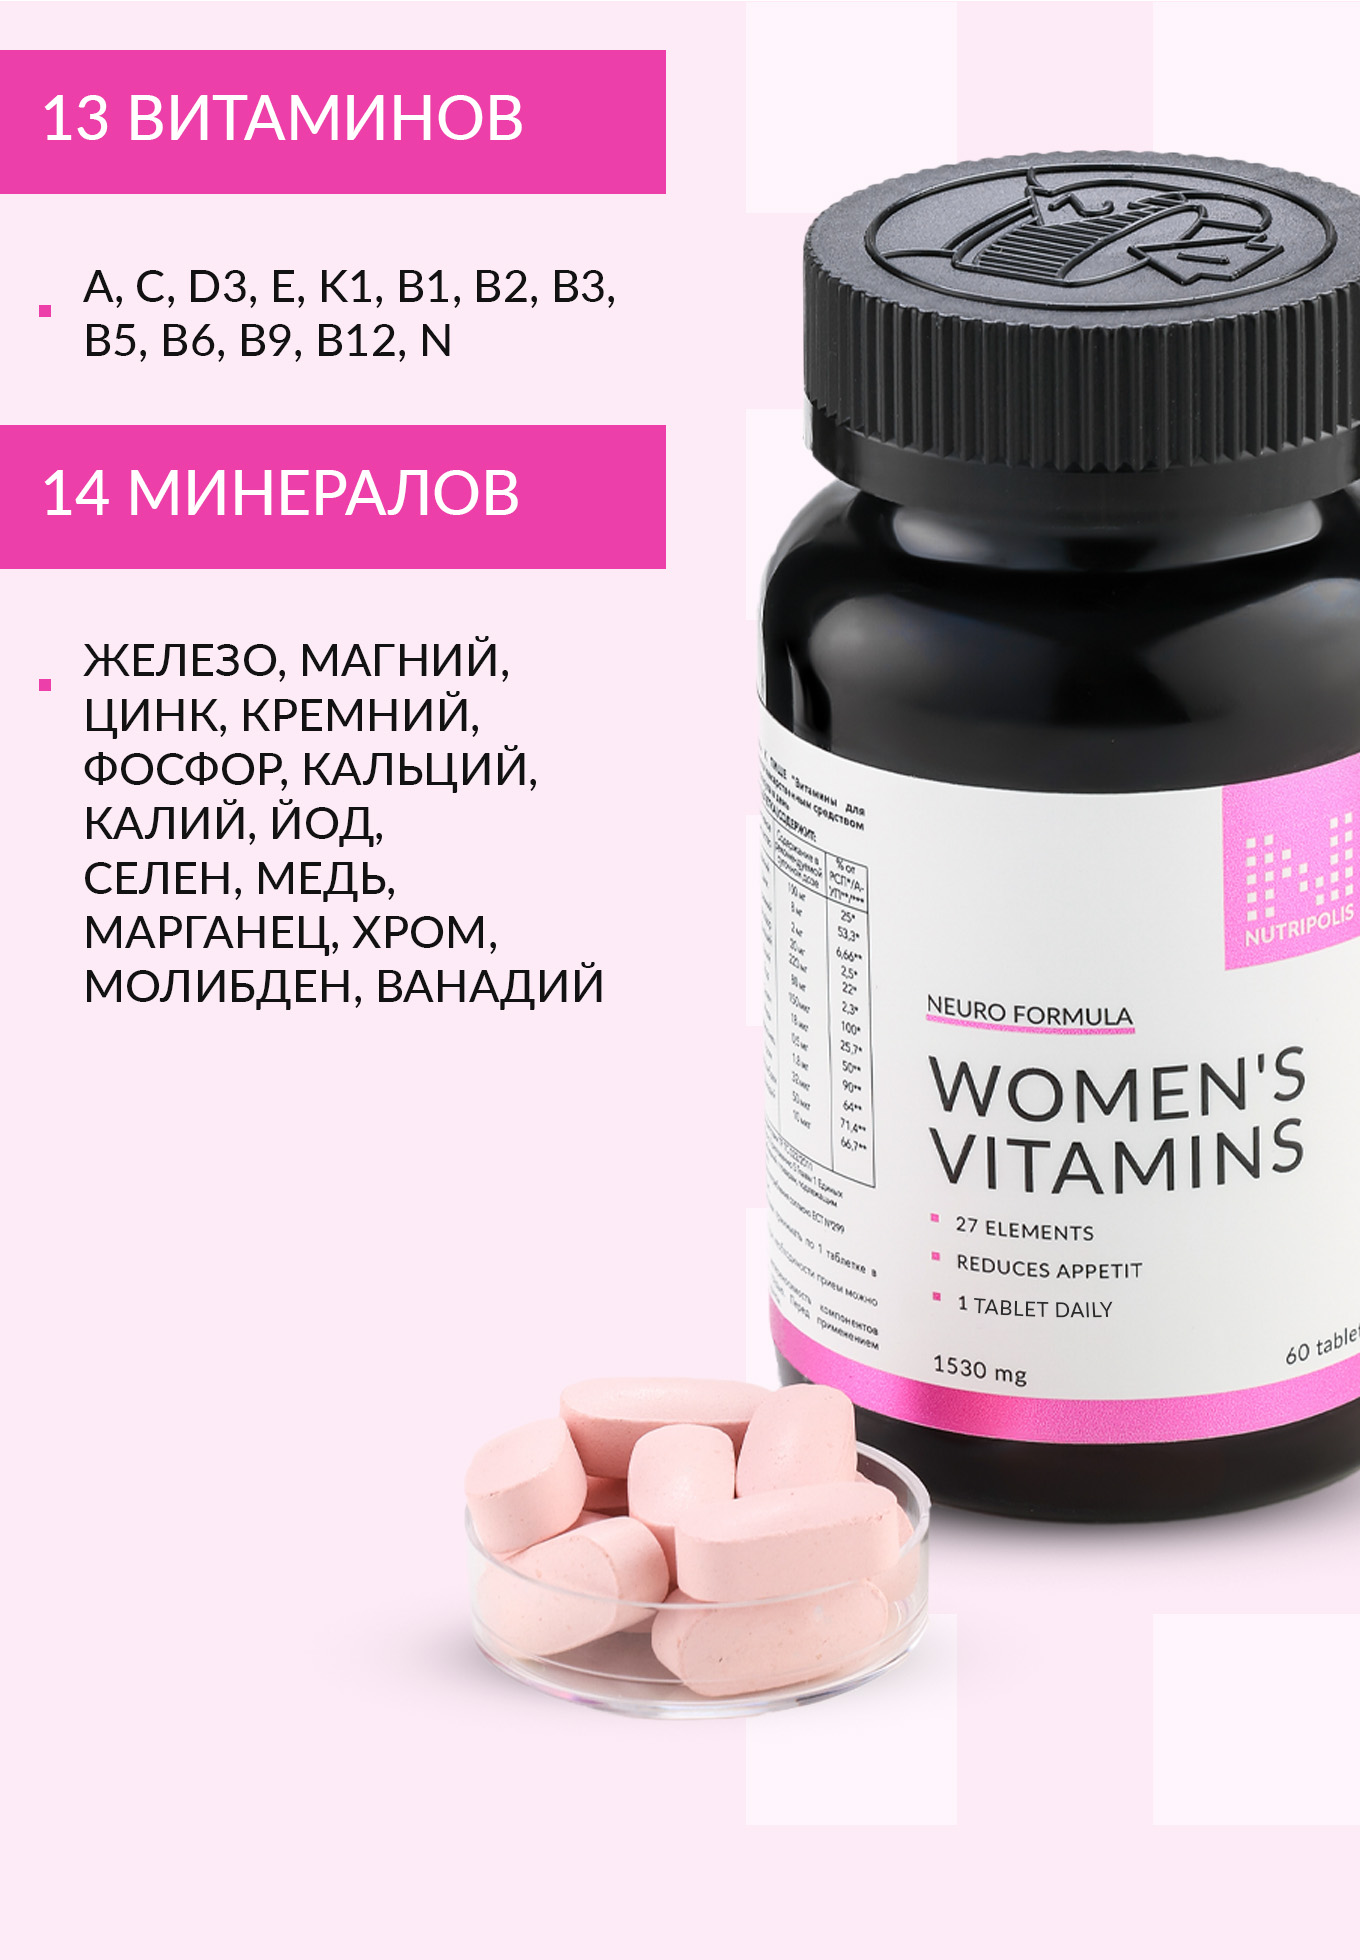 Витамины для женщин NUTRIPOLIS - фото 4